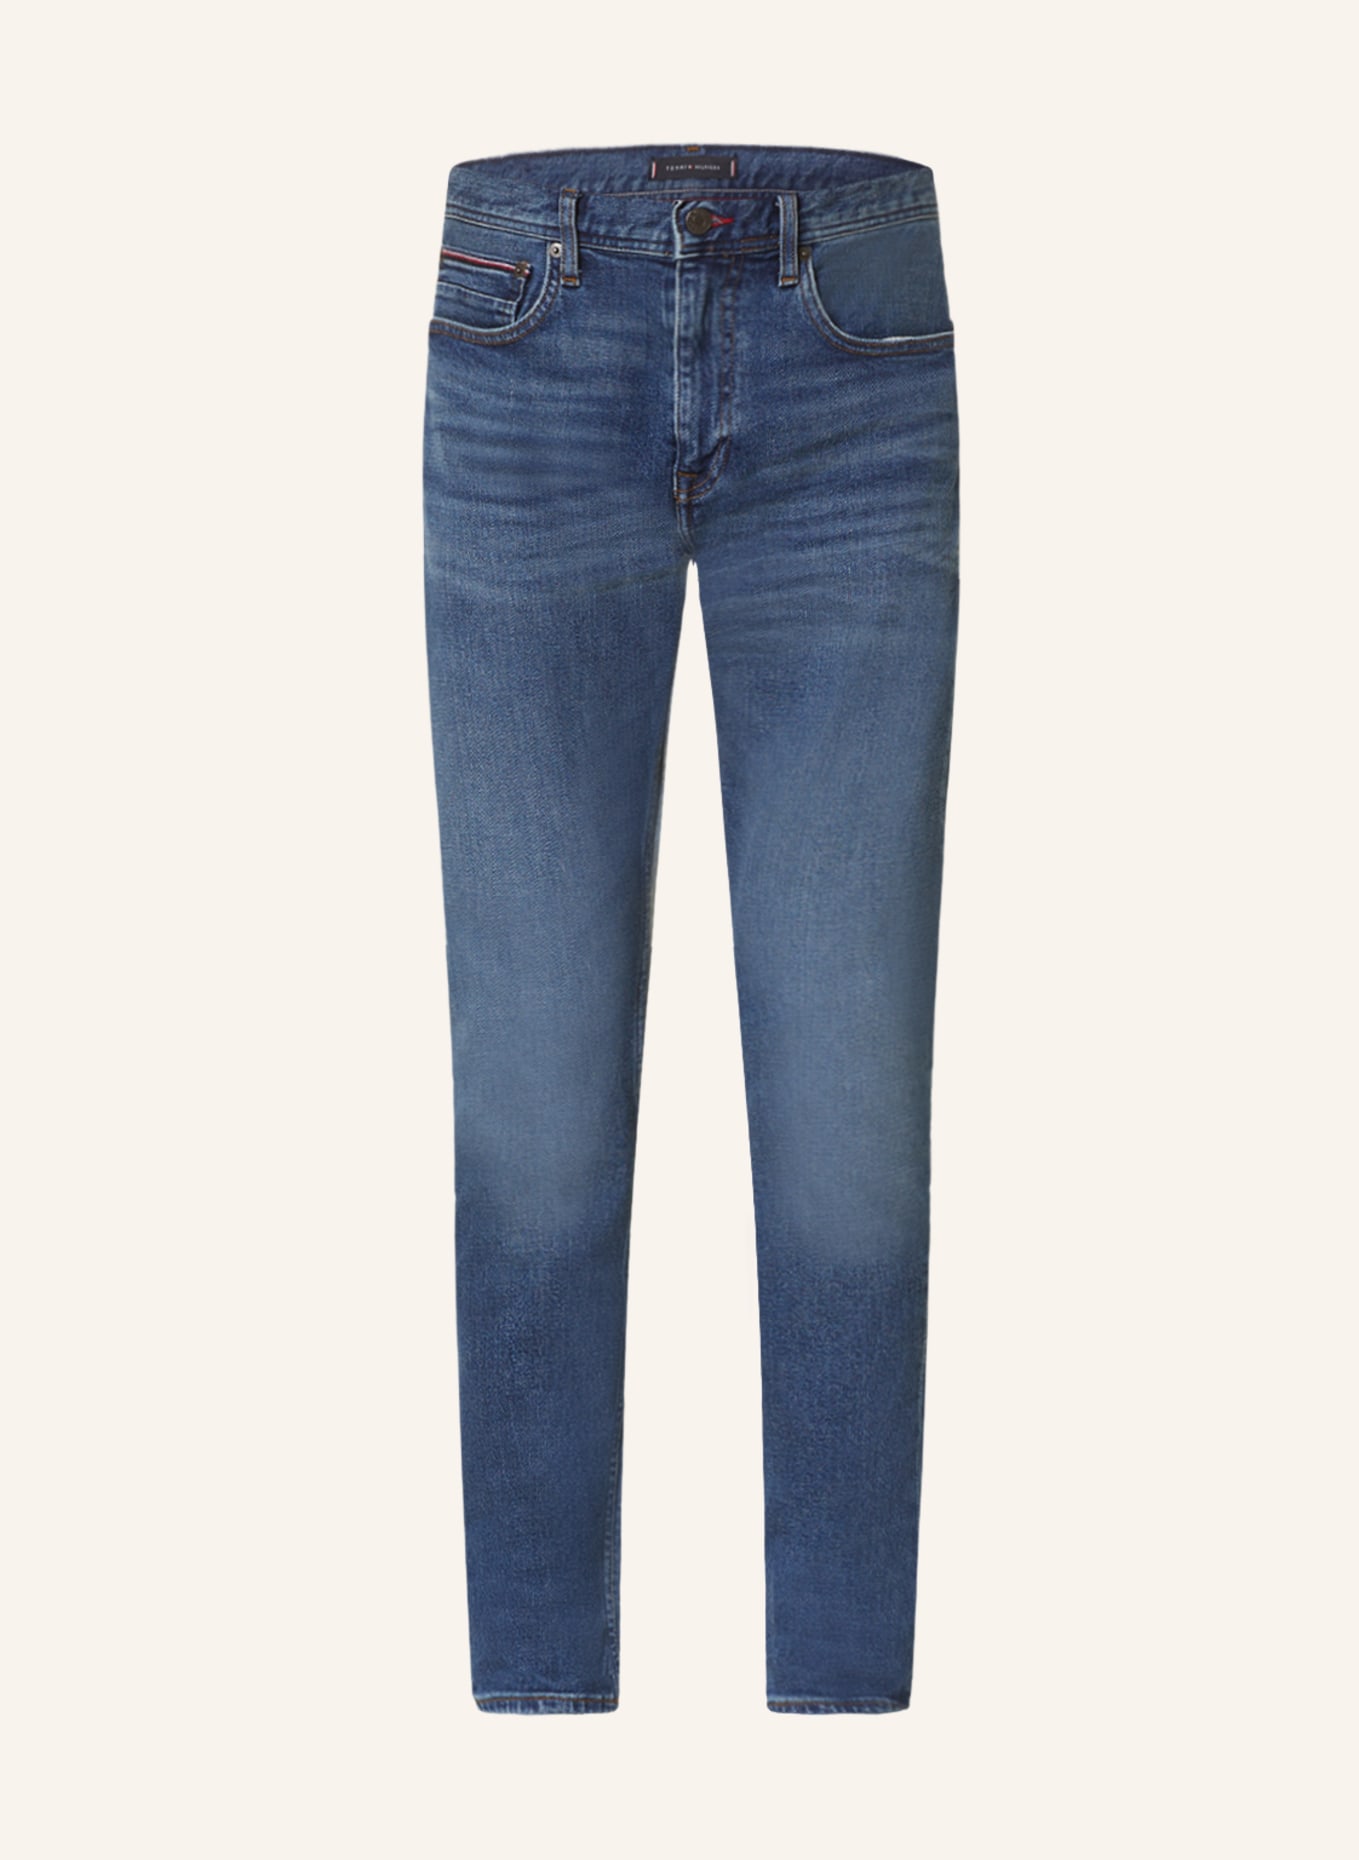 TOMMY HILFIGER Jeans HOUSTON Slim Taper Fit, Farbe: 1A9 Siegel Blue (Bild 1)